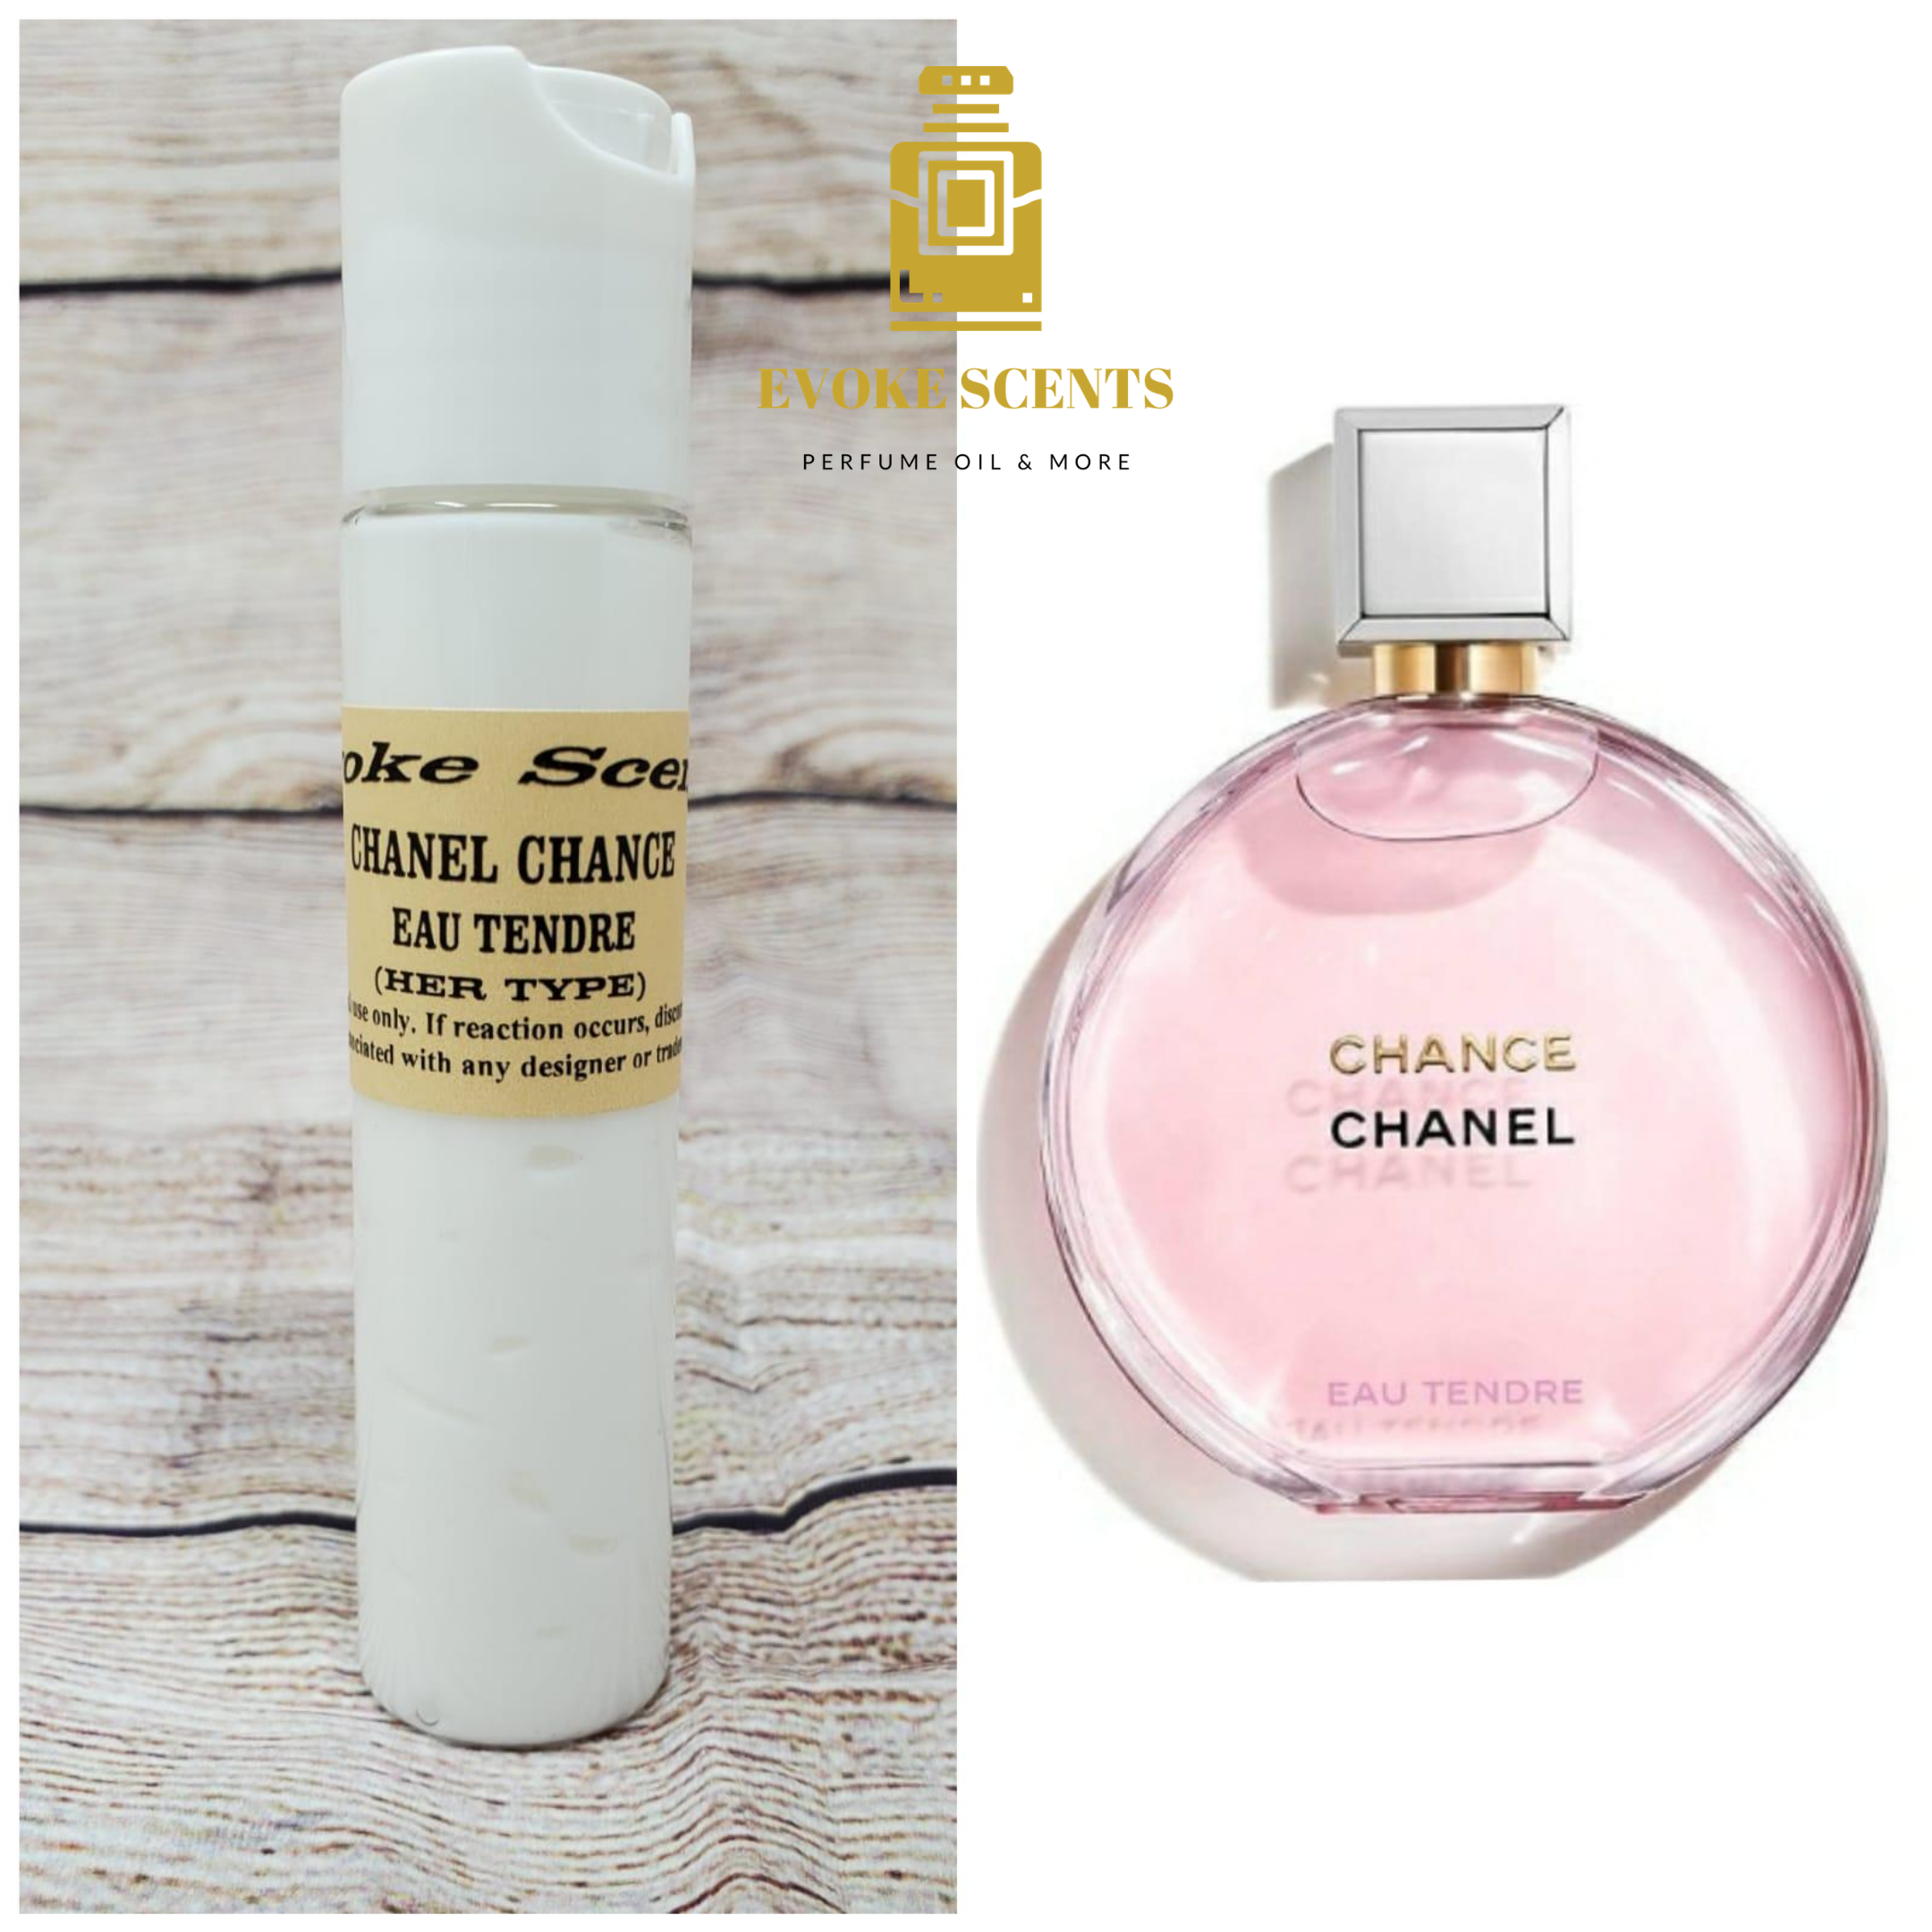 chanel chance edp perfume for women